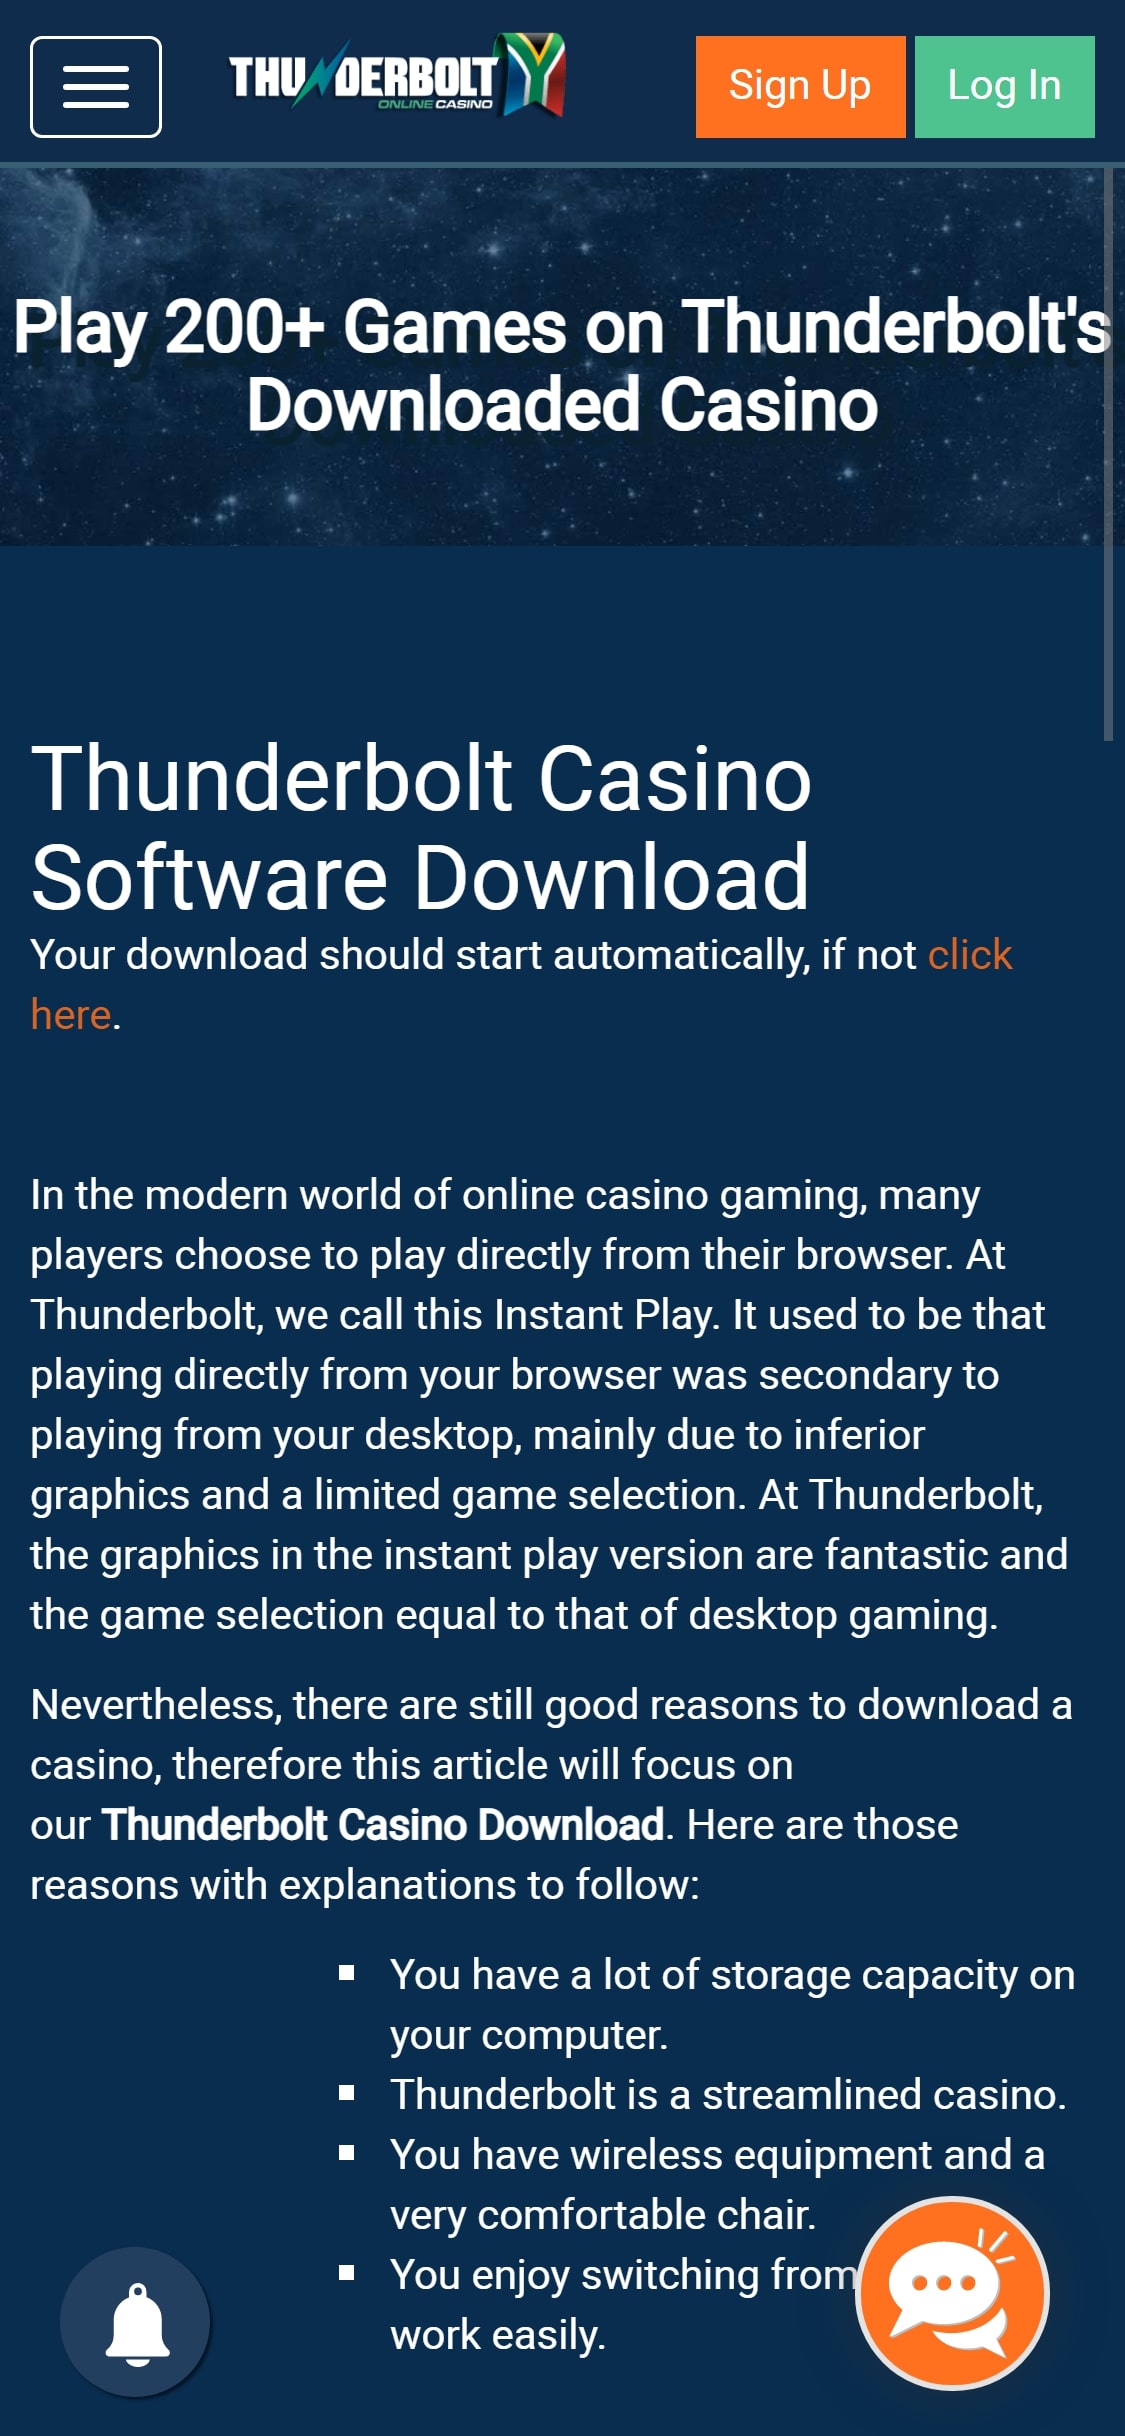 Thunderbolt Casino Mobile App Review